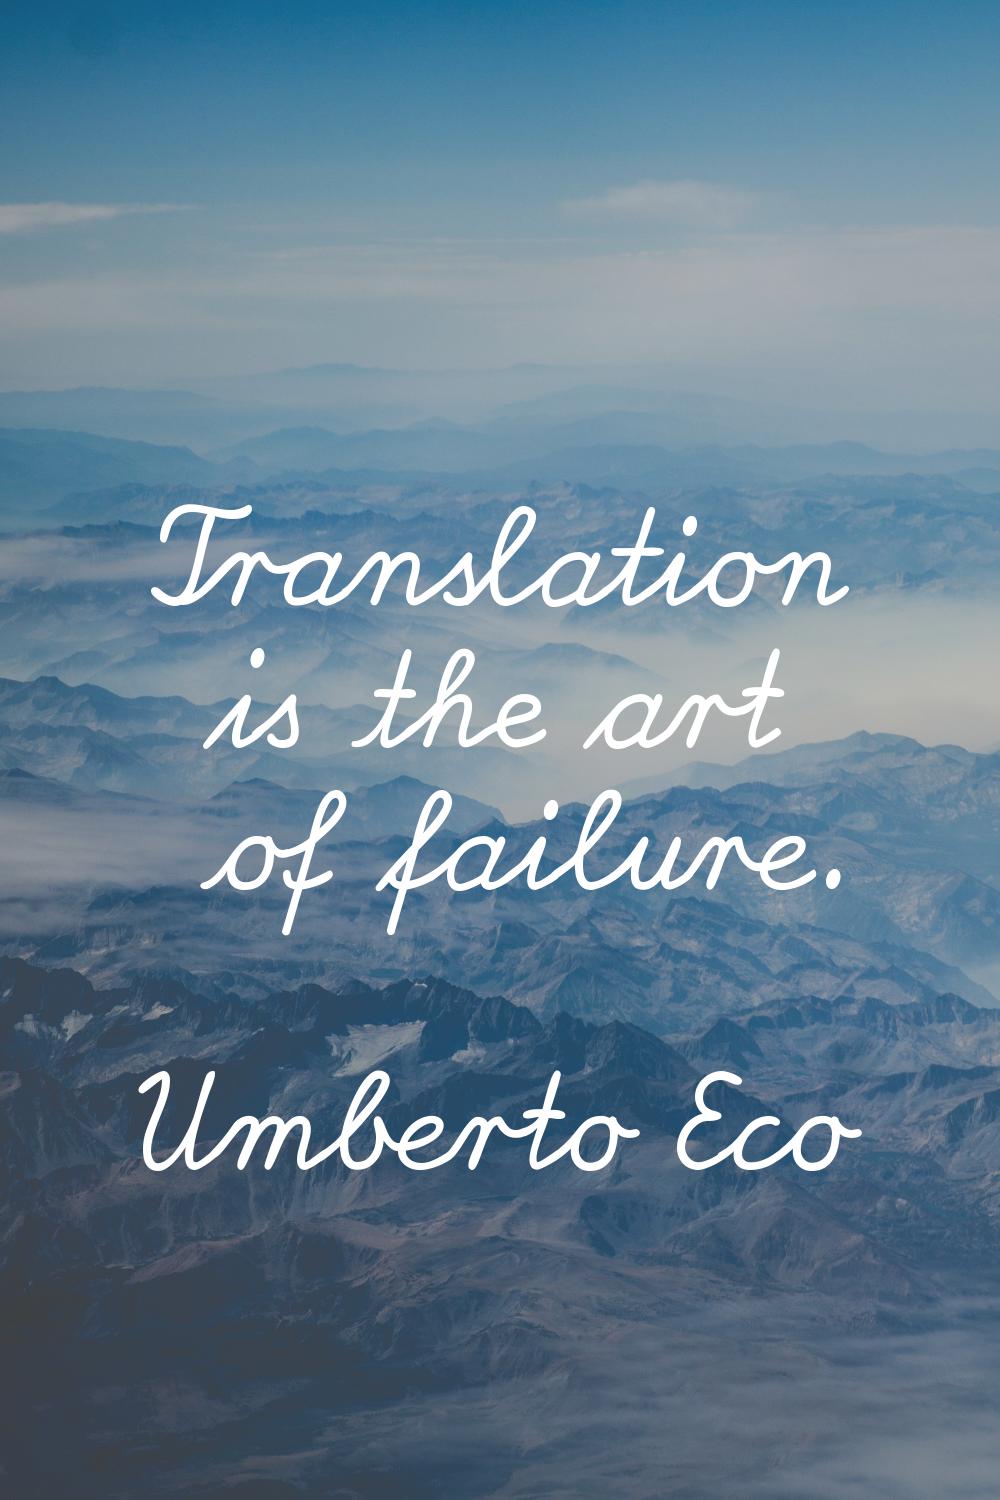 Translation is the art of failure.